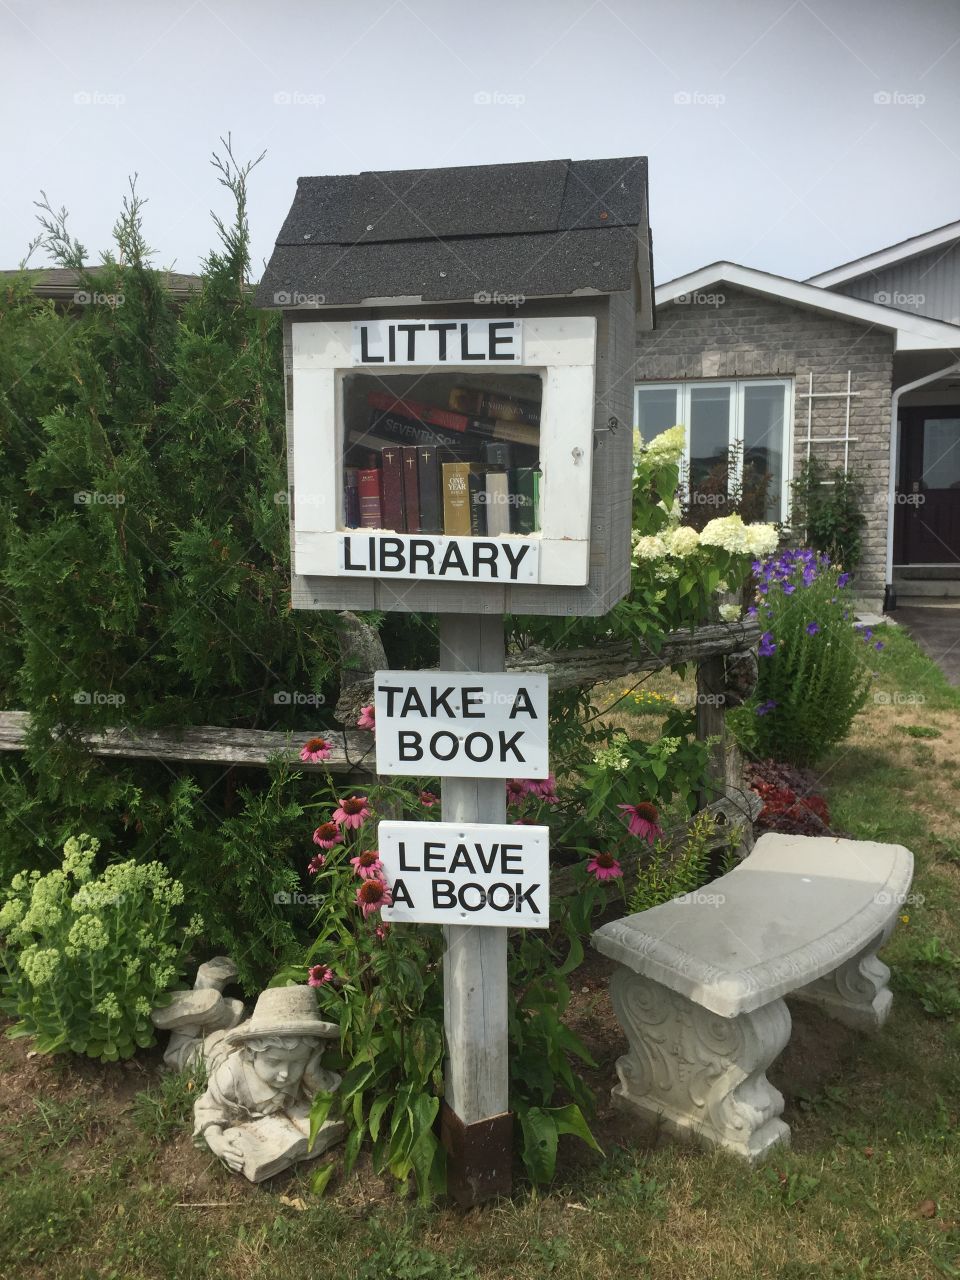 Little street library 